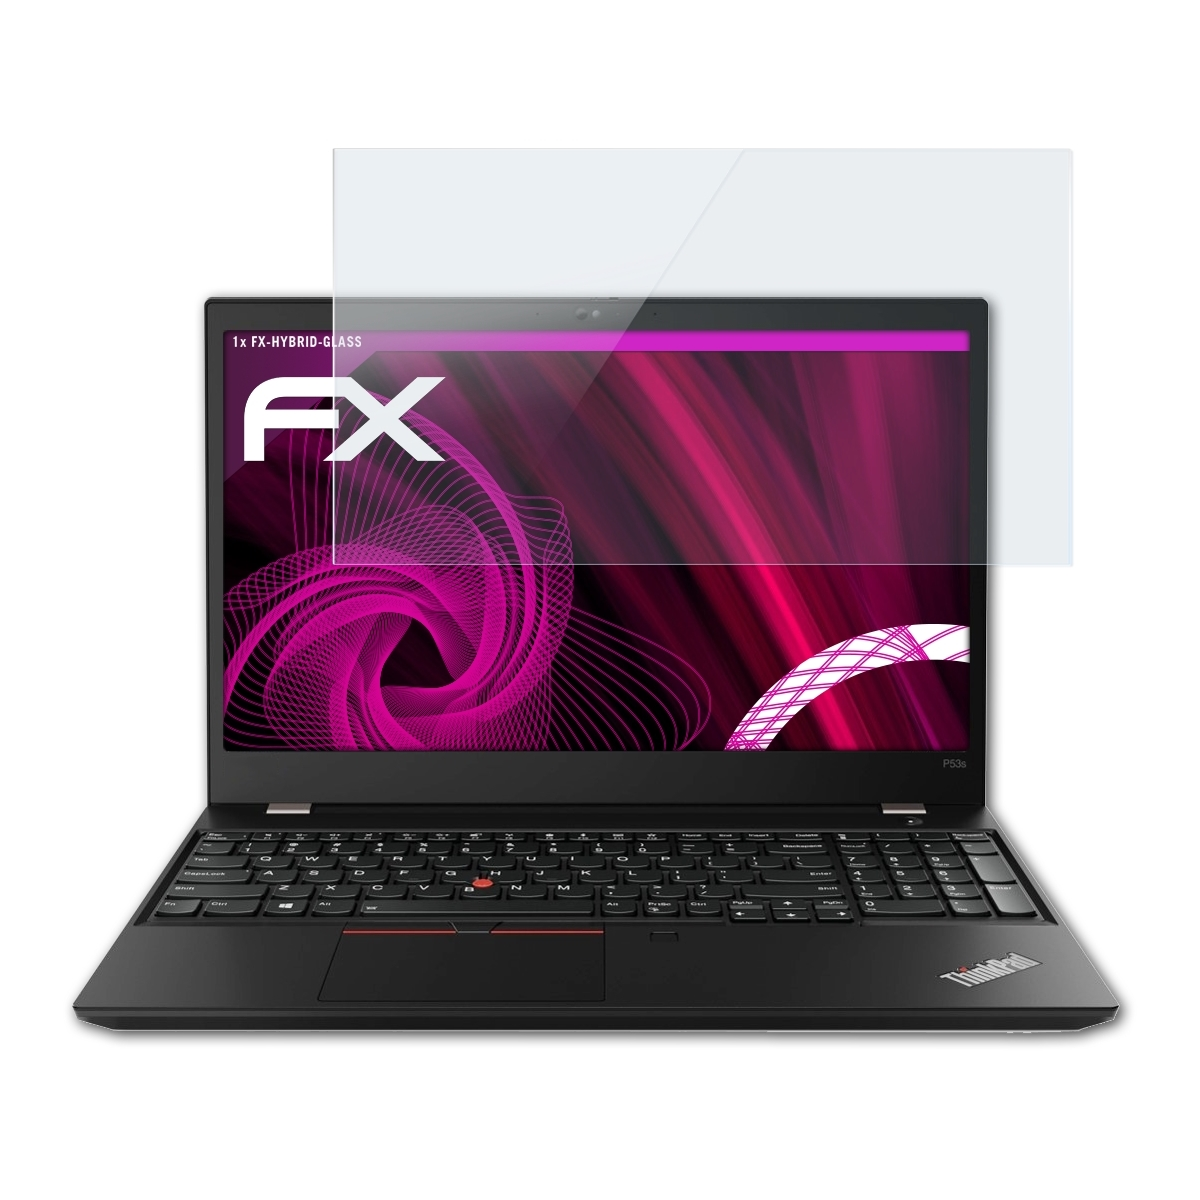 P53s) ATFOLIX ThinkPad Schutzglas(für FX-Hybrid-Glass Lenovo